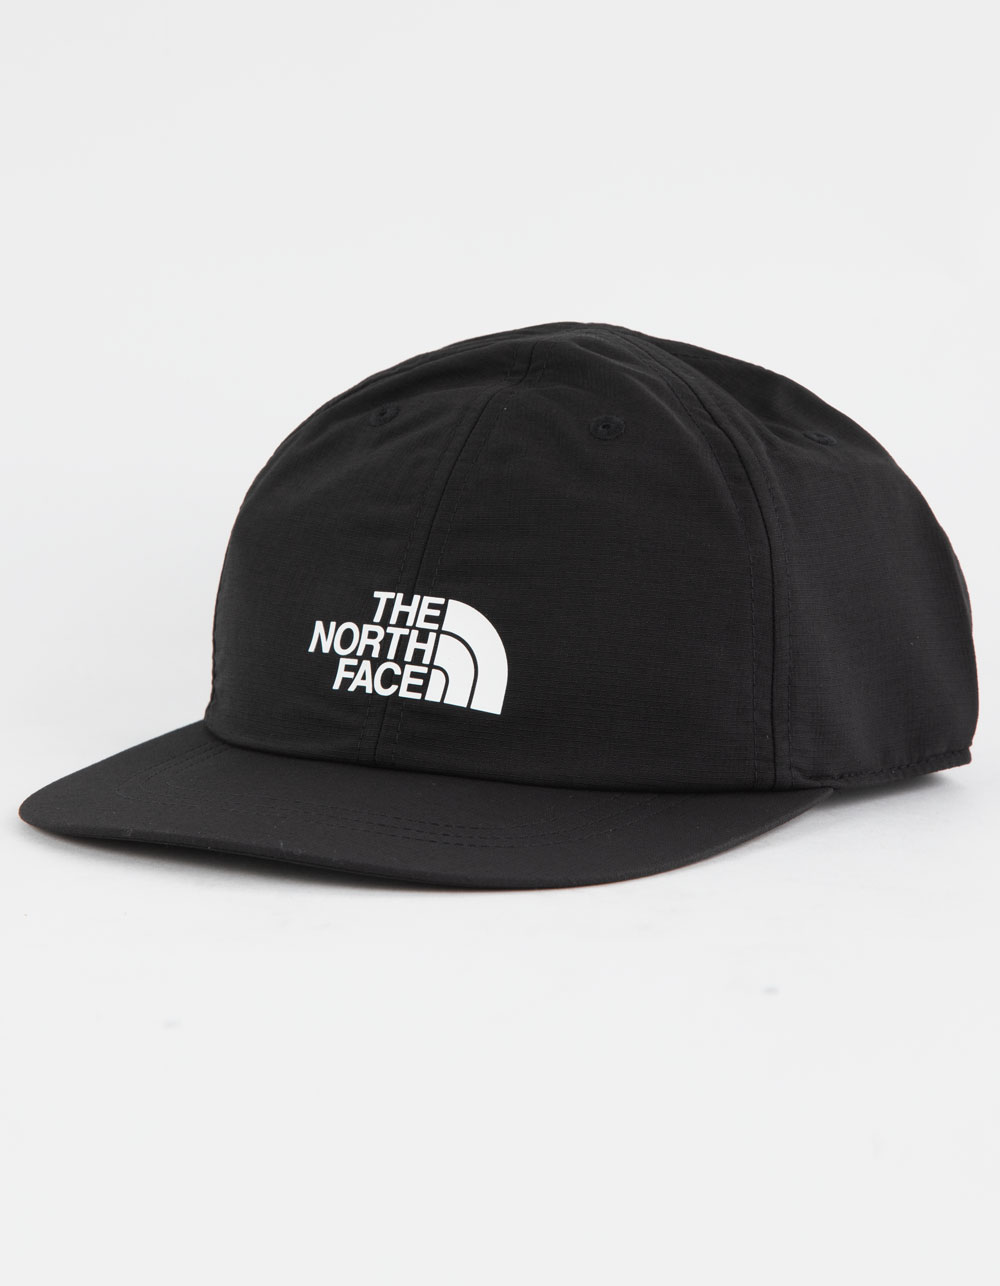 THE NORTH FACE Horizon Strapback Hat